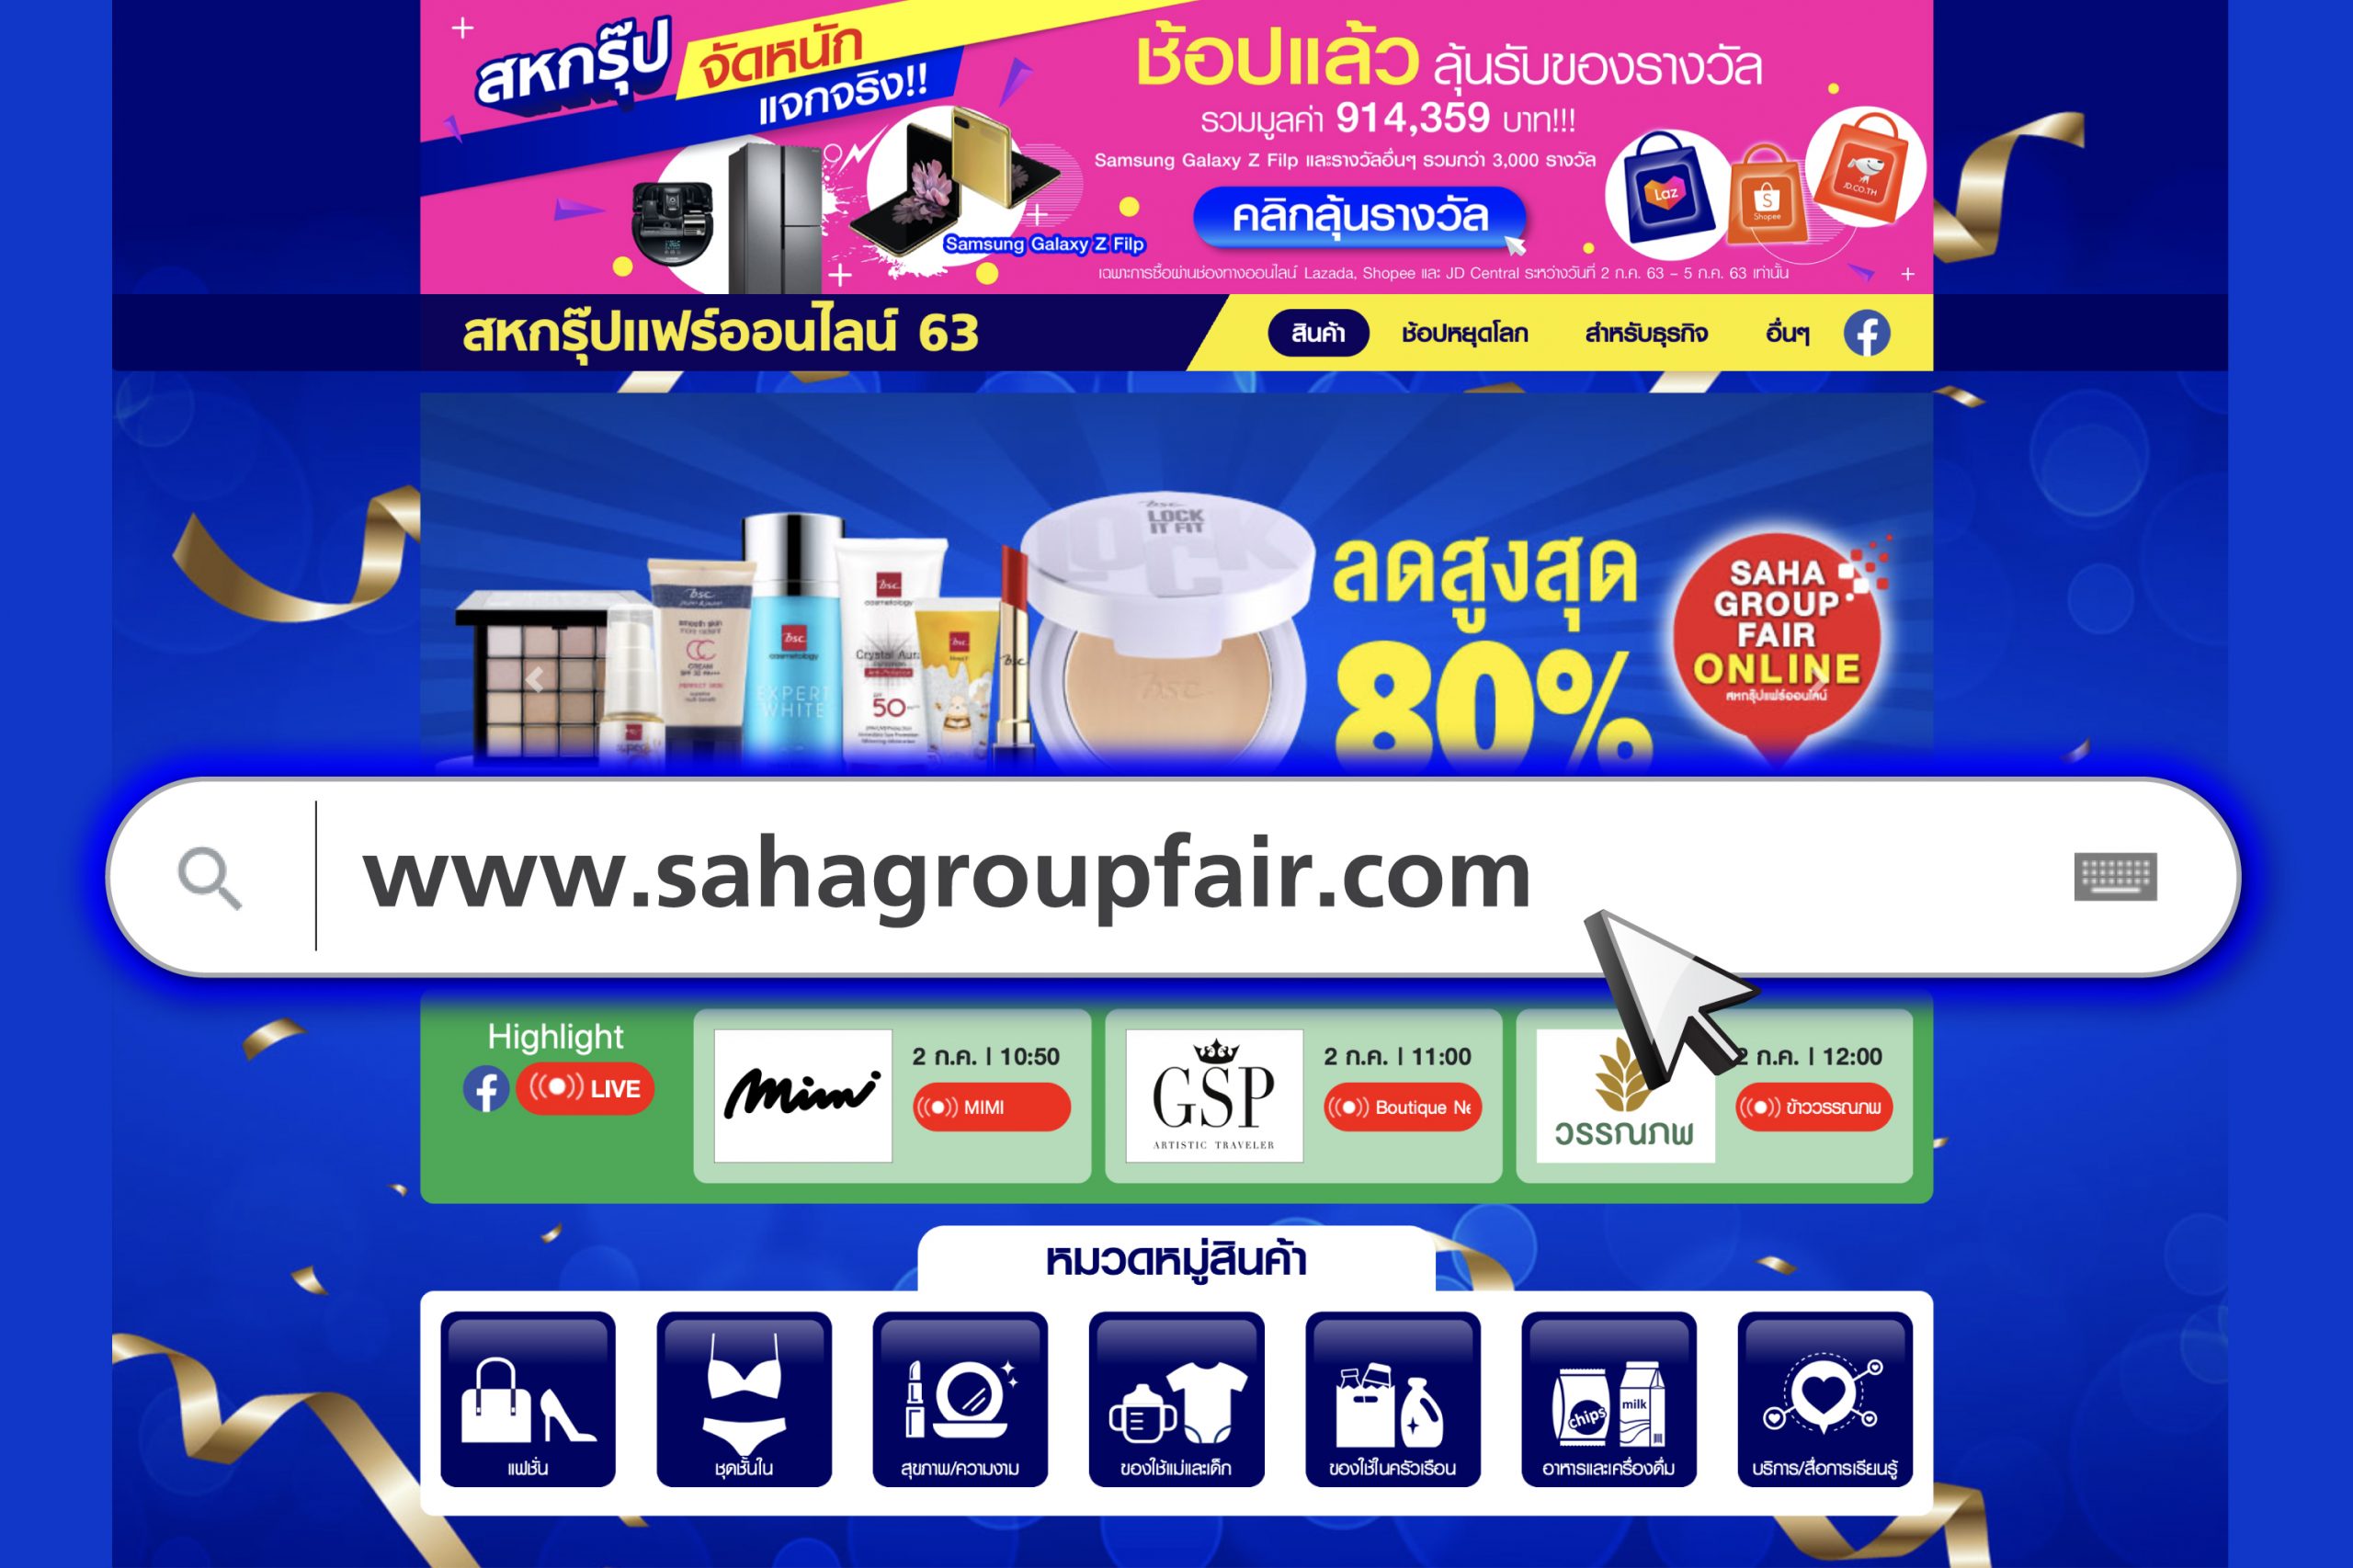 www.sahagroupfair.com เว็บไซต์มาแรงเพื่อขาช้อปออนไลน์